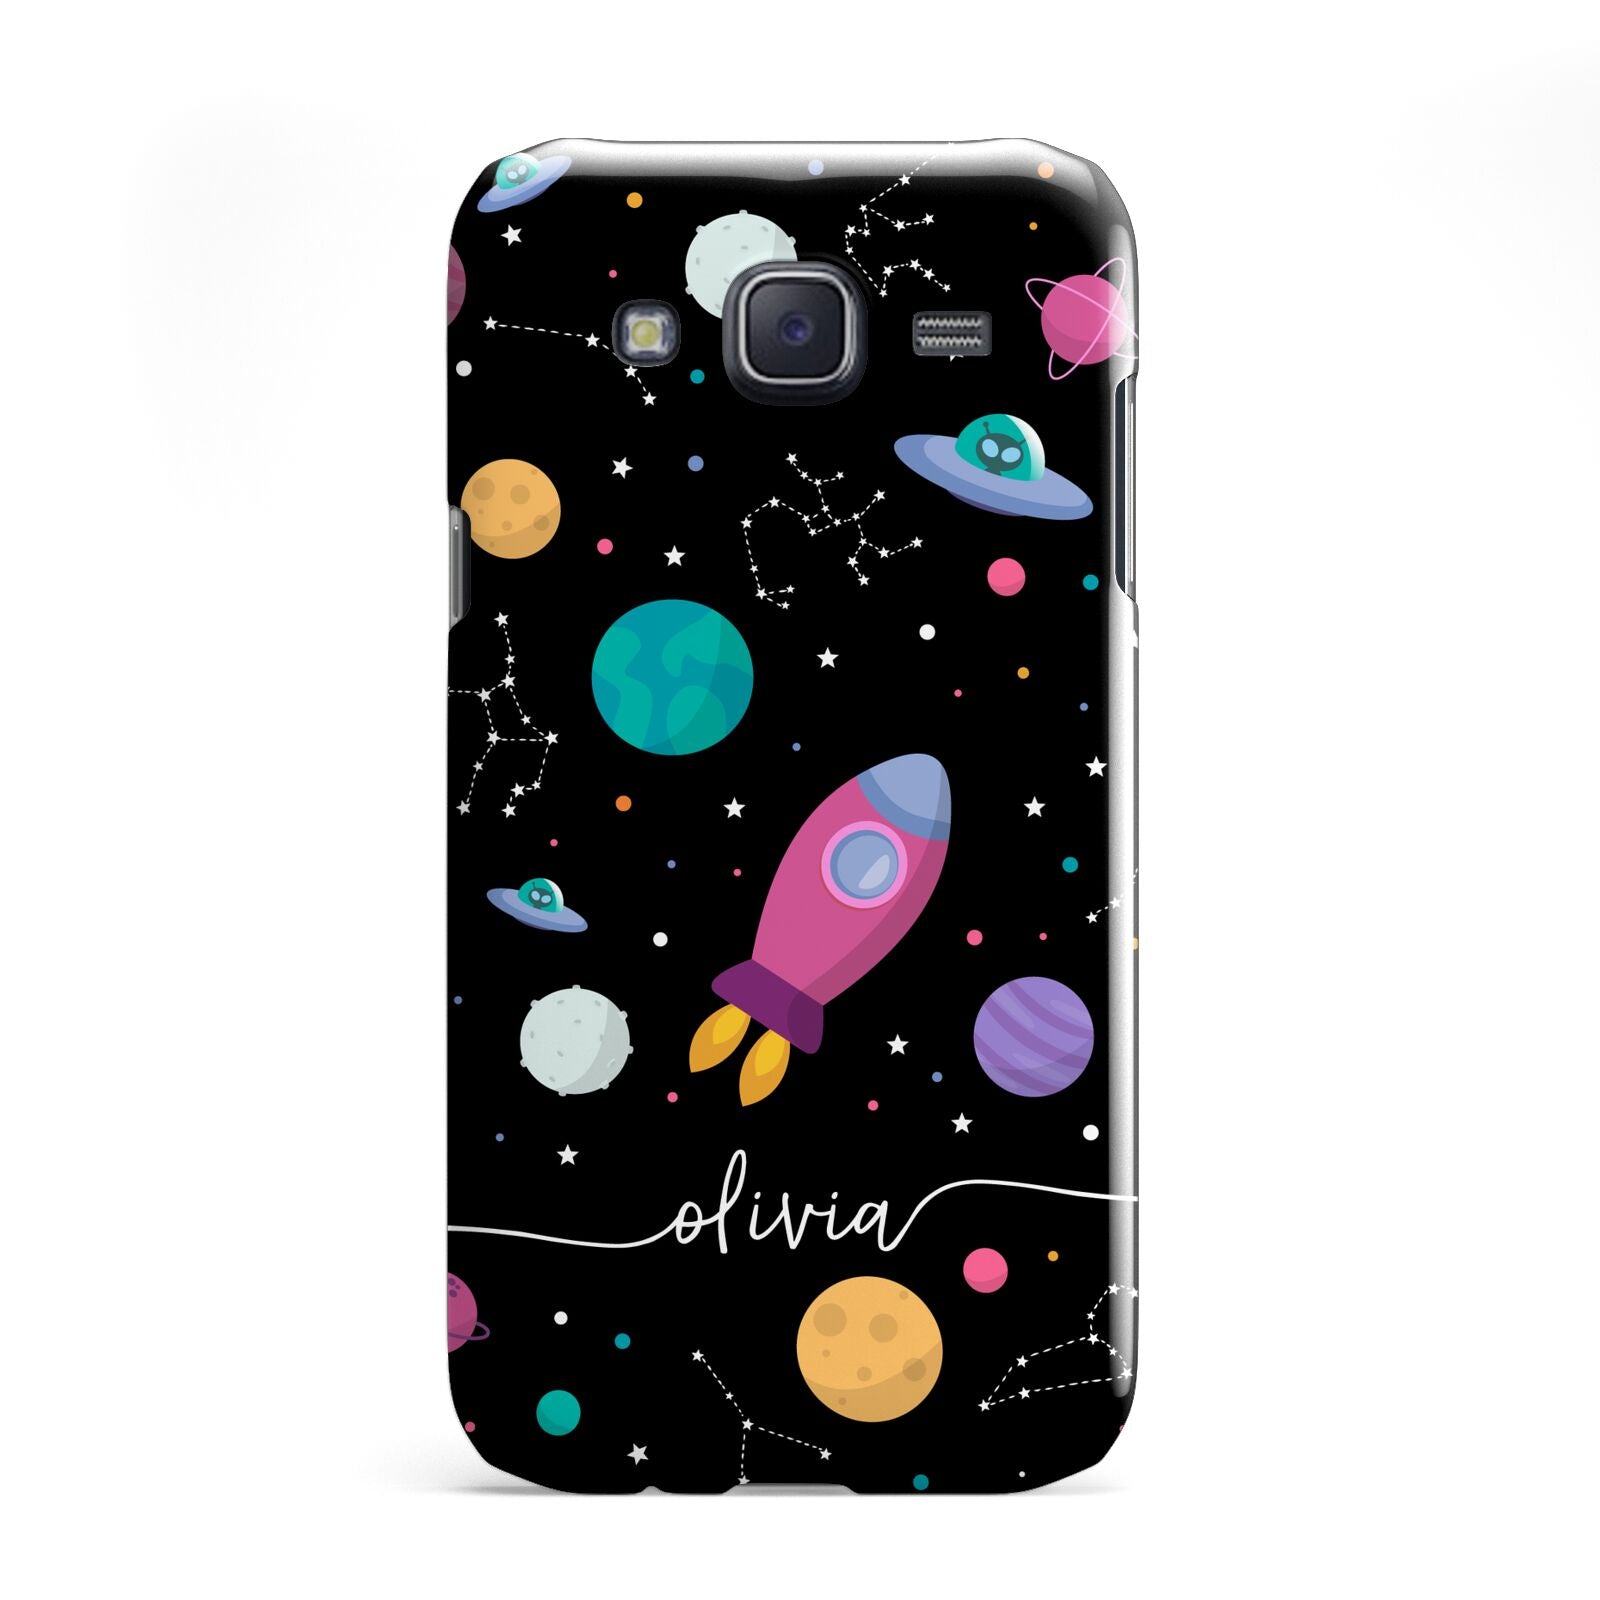 Galaxy Artwork with Name Samsung Galaxy J5 Case